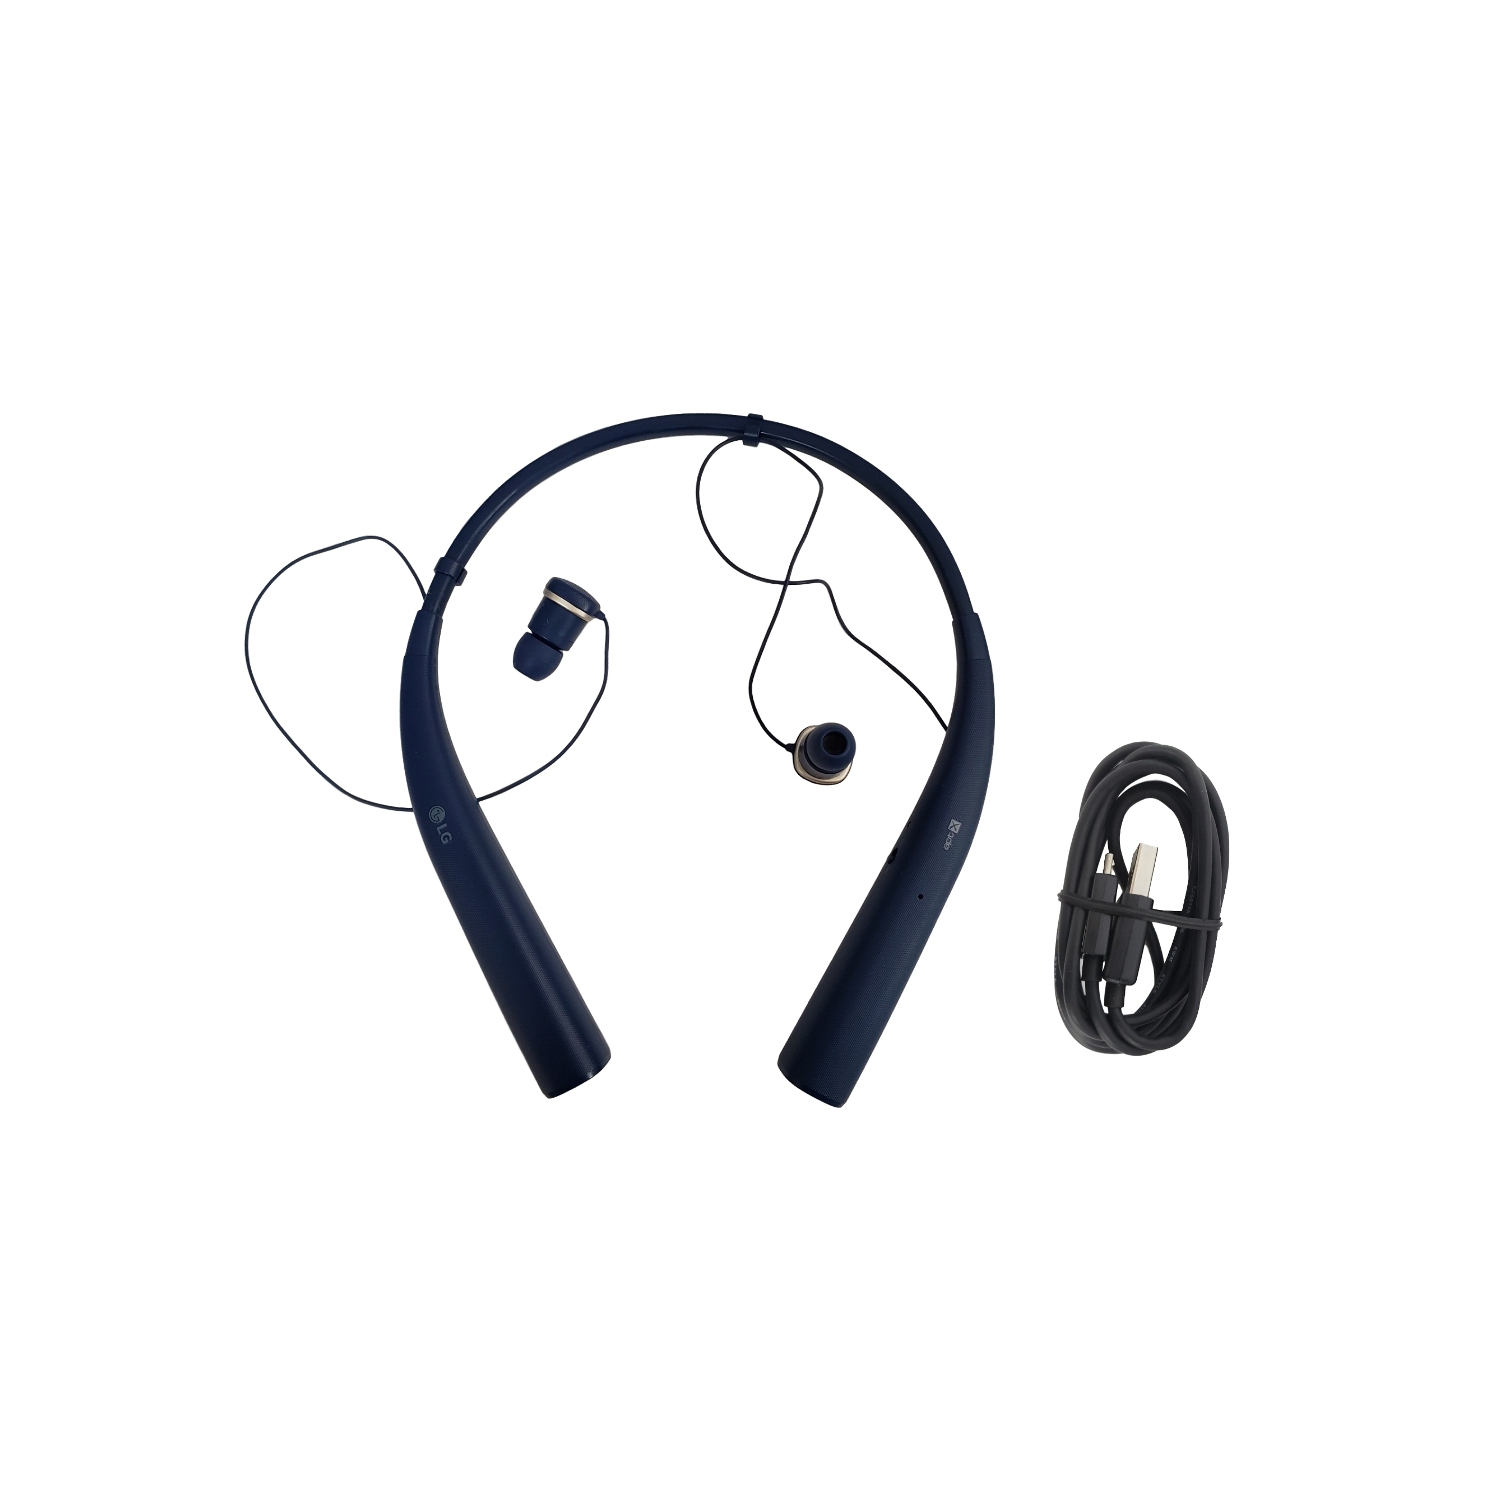 LG Tone Pro HBS-780 OEM Wireless Bluetooth Neckband Headphones Blue - Certified Refurbished